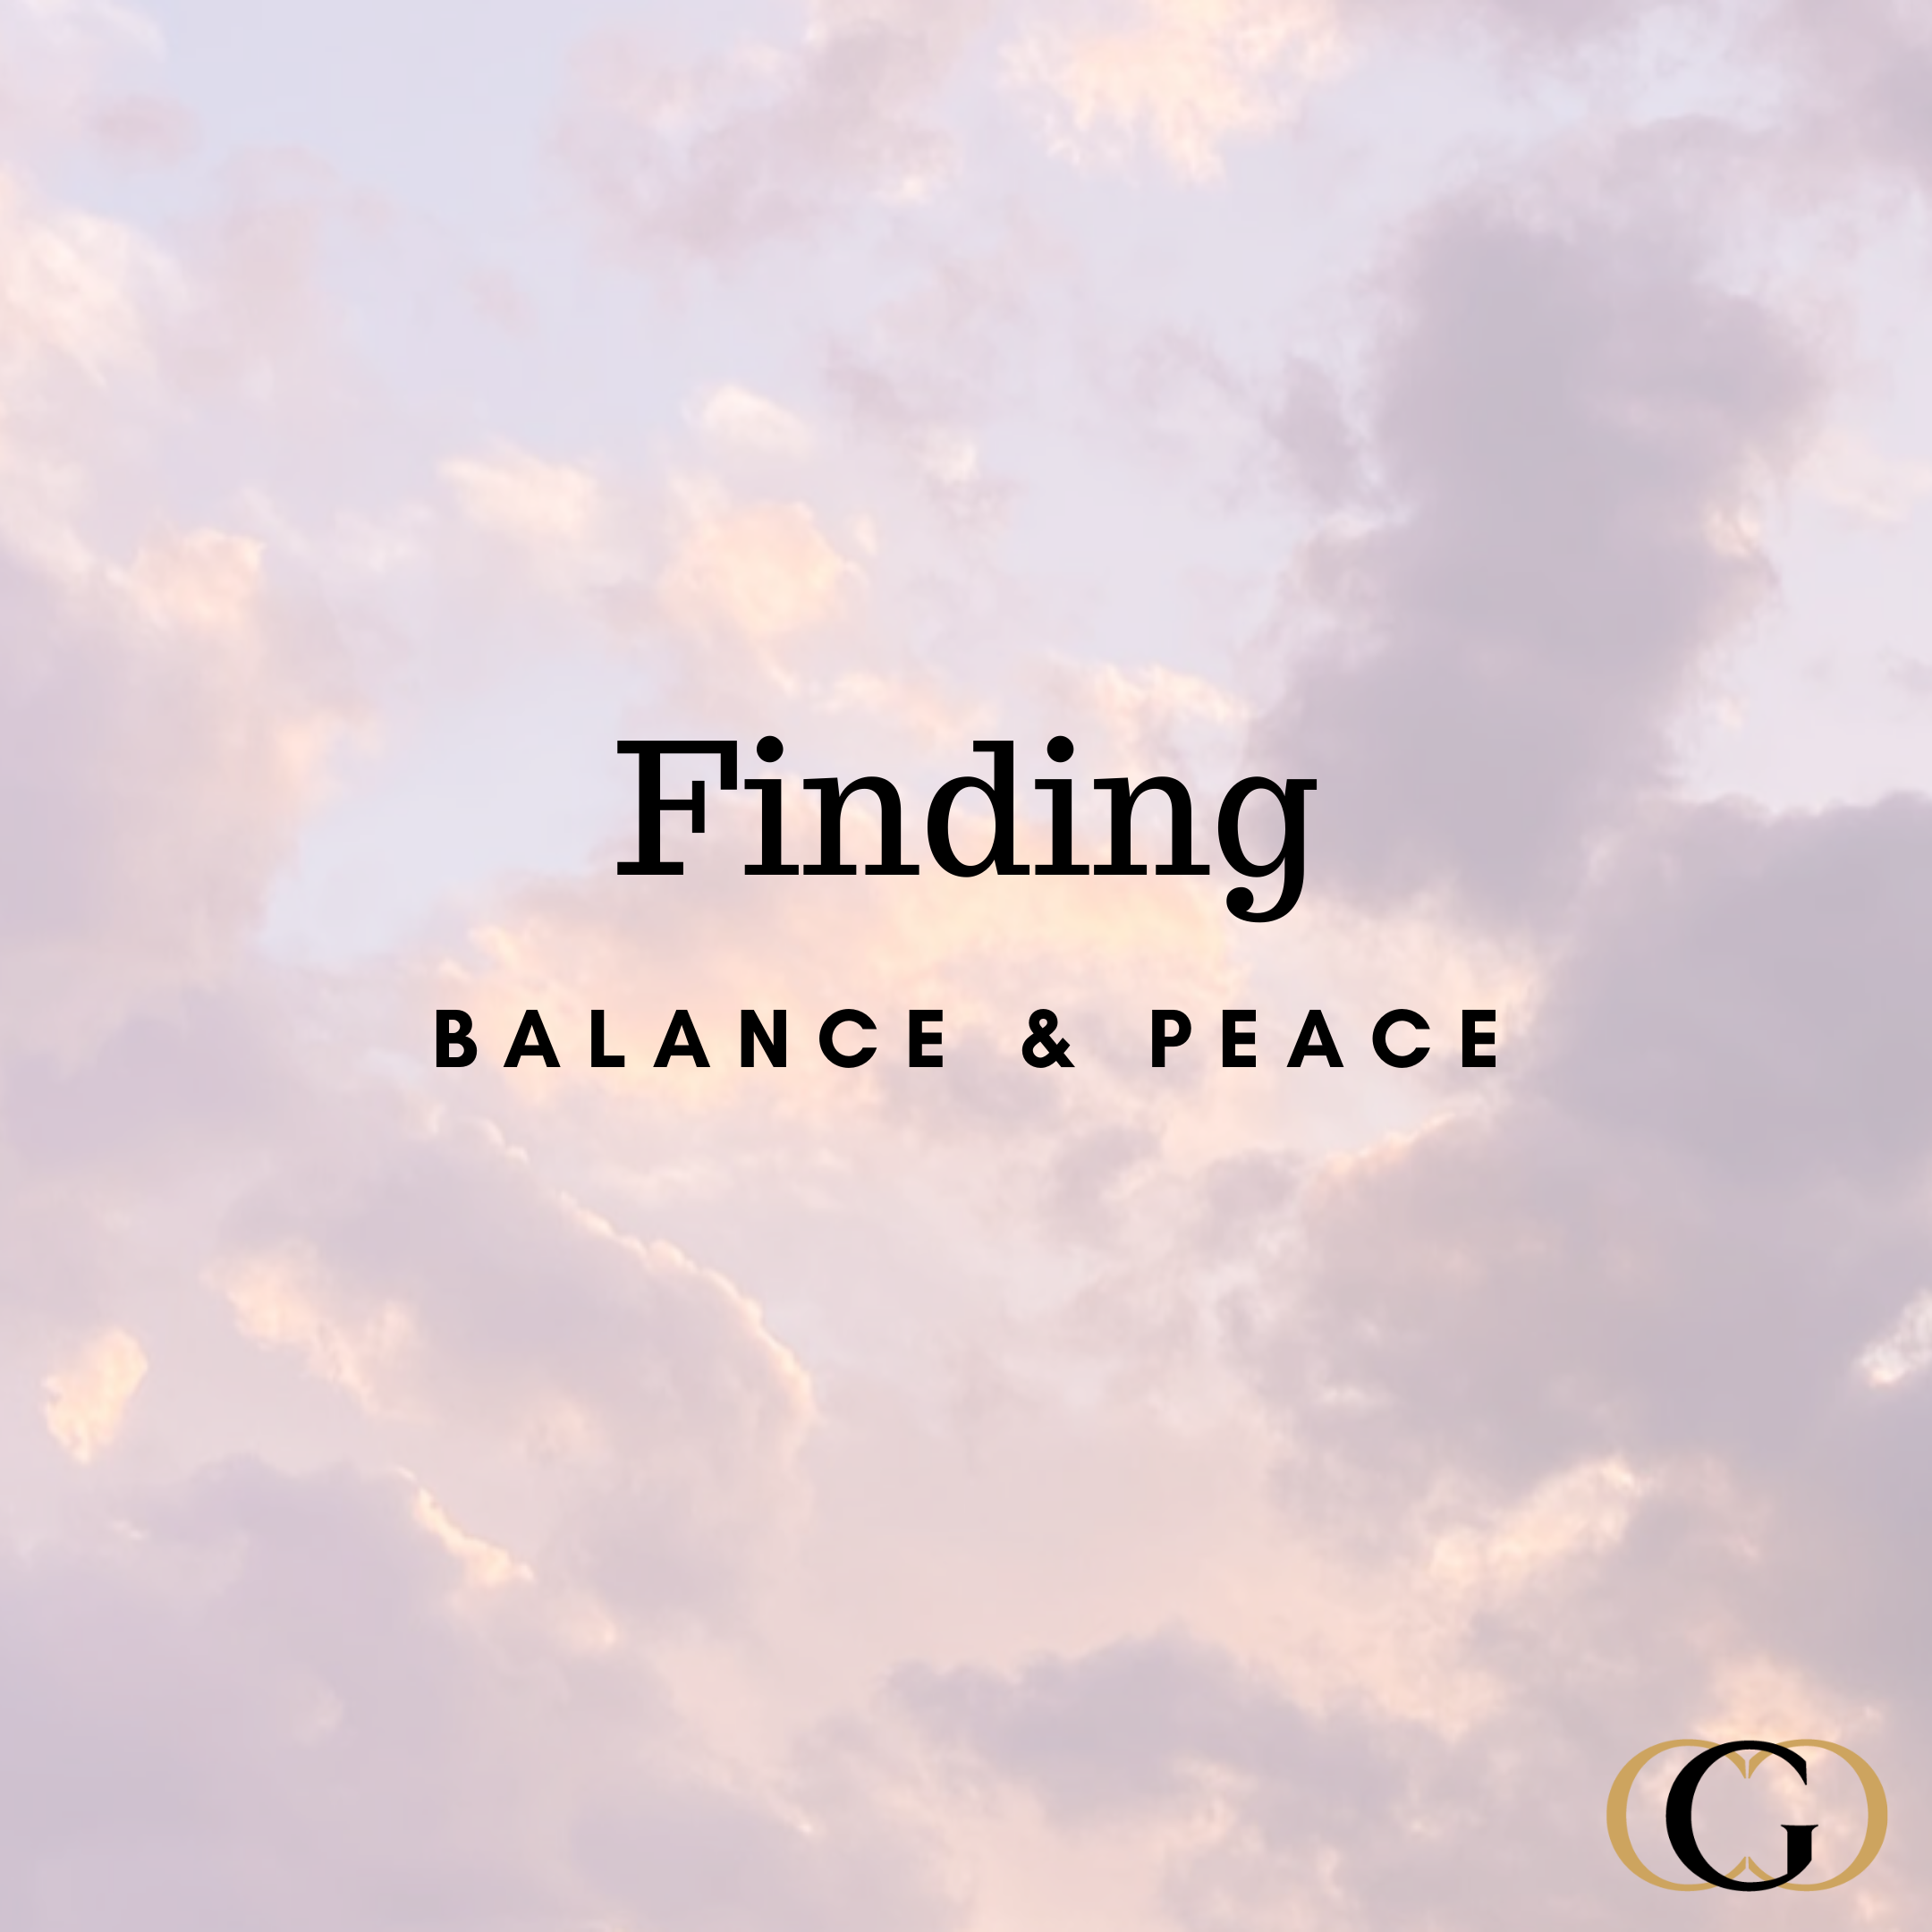 Finding Balance & Peace